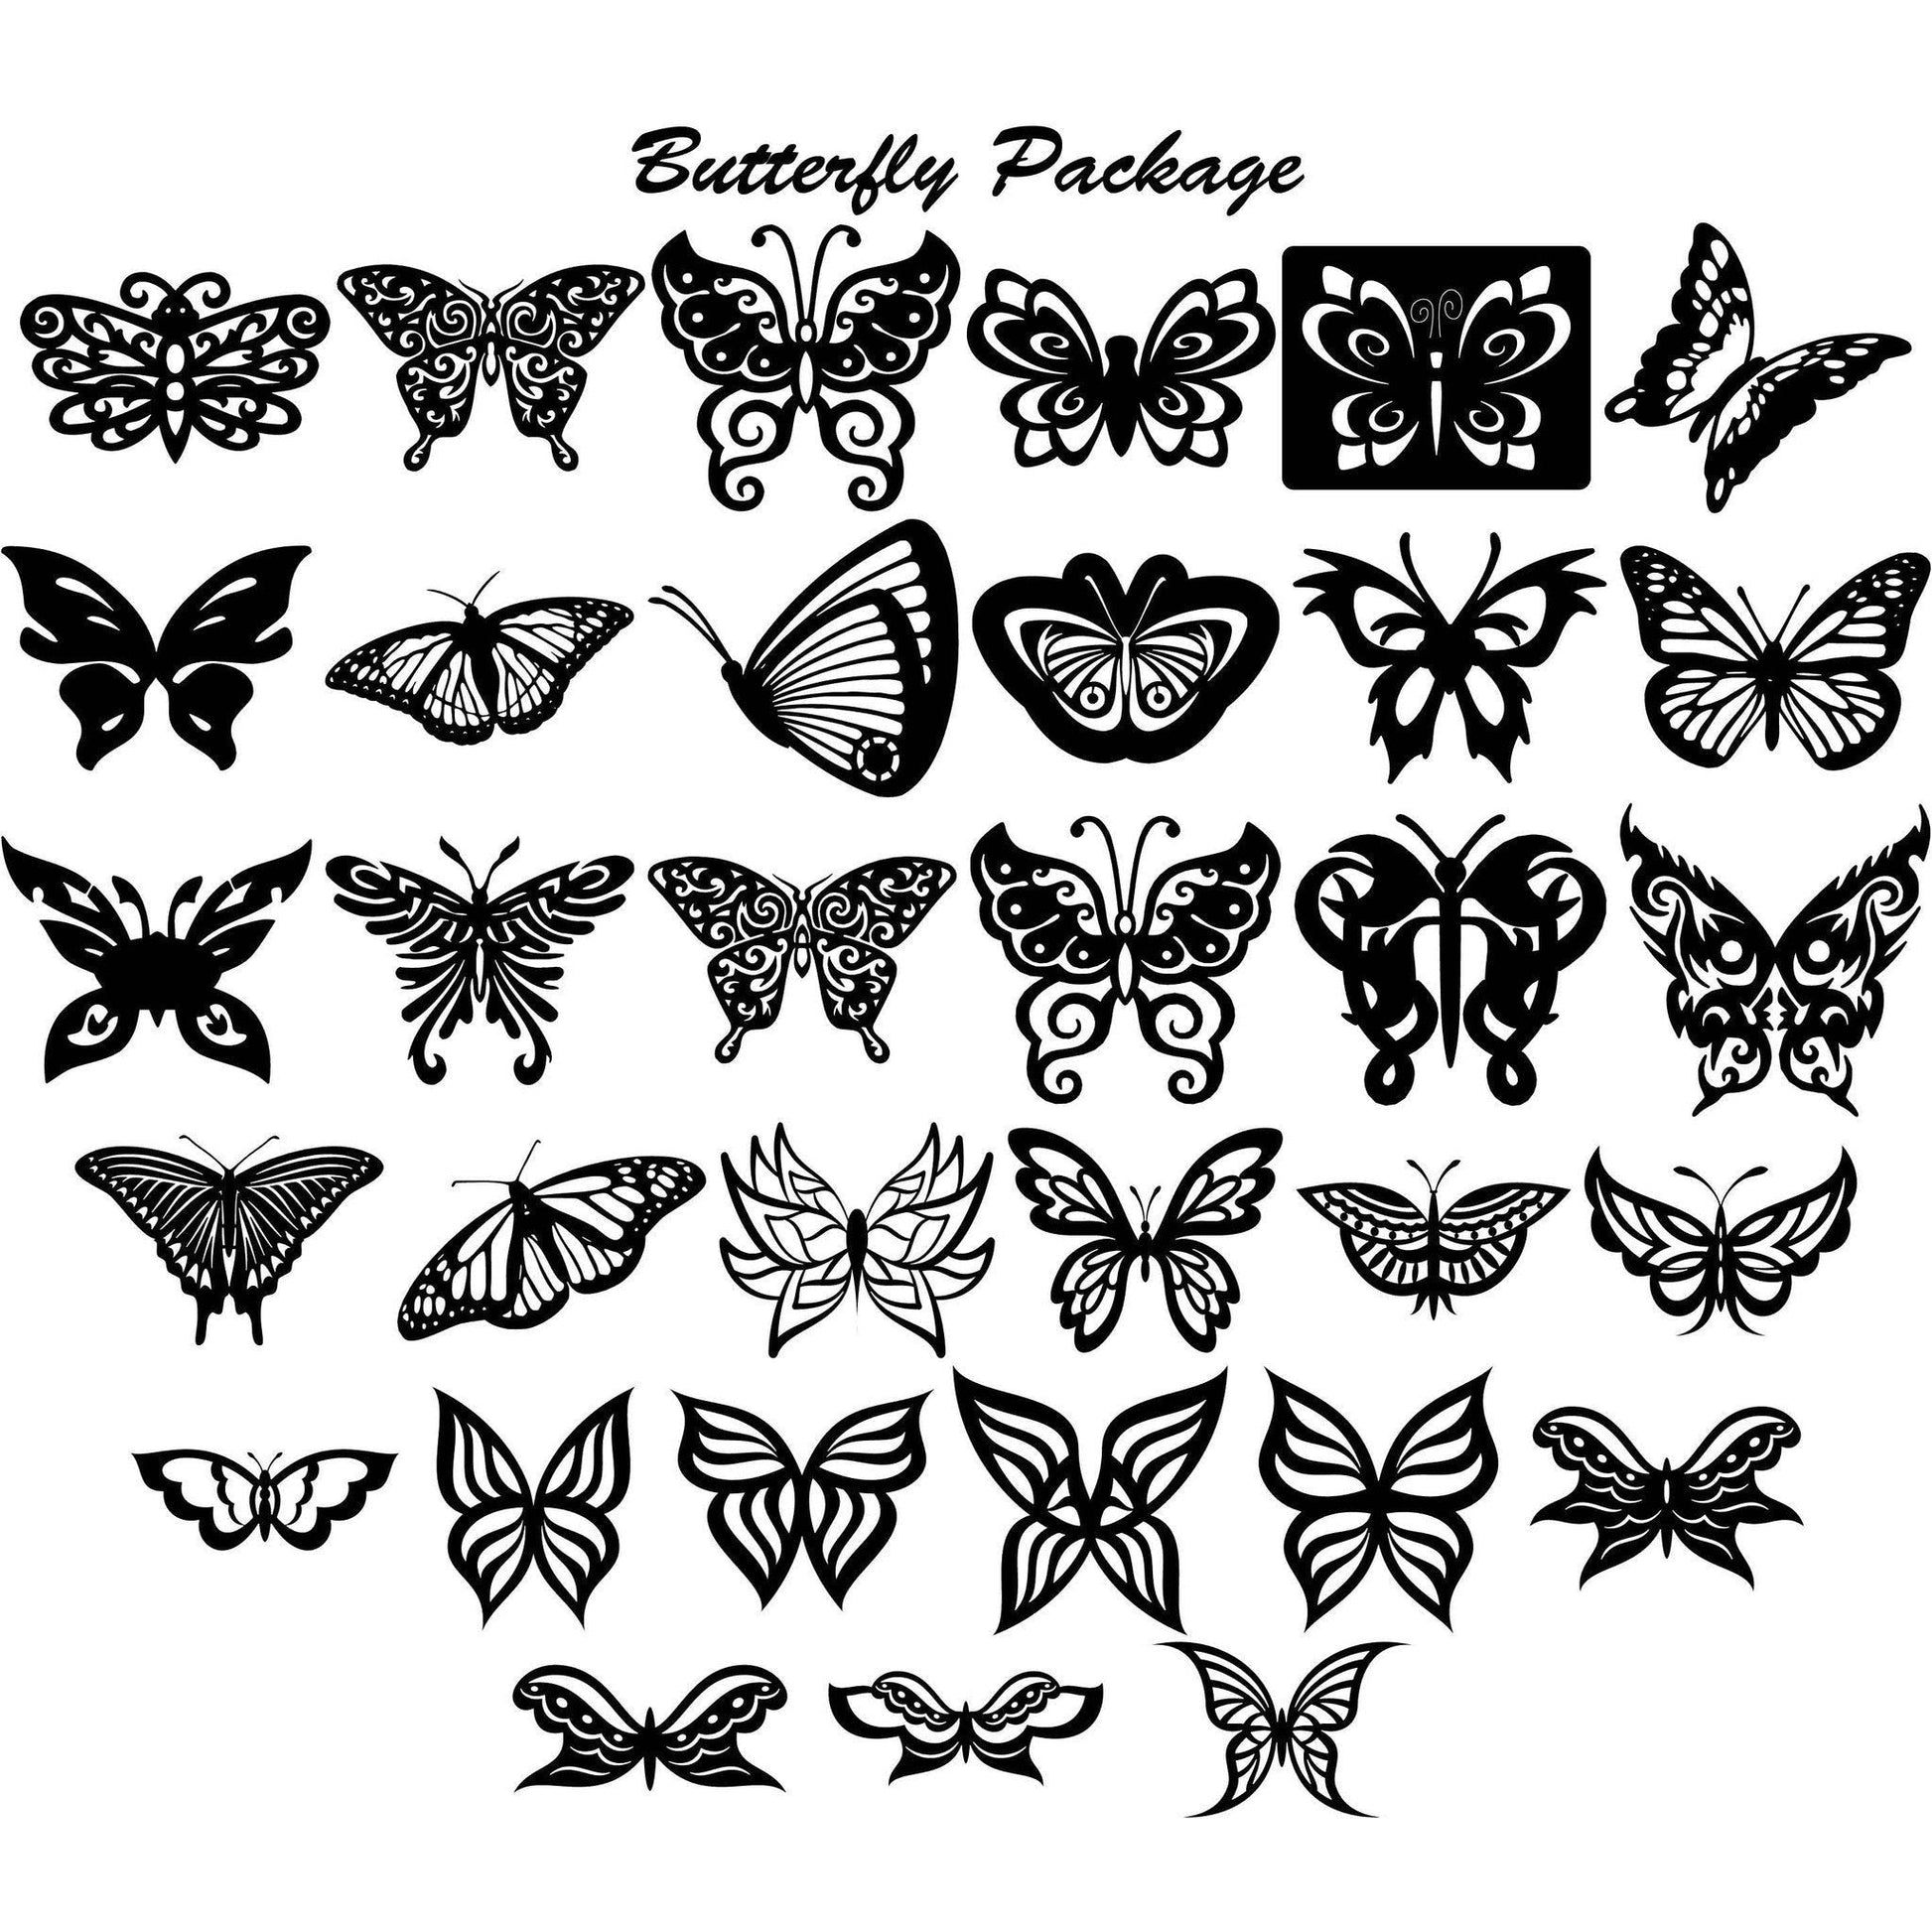 Butterfly Ornaments Decor-DXFforCNC.com-DXF Files cut ready cnc machines